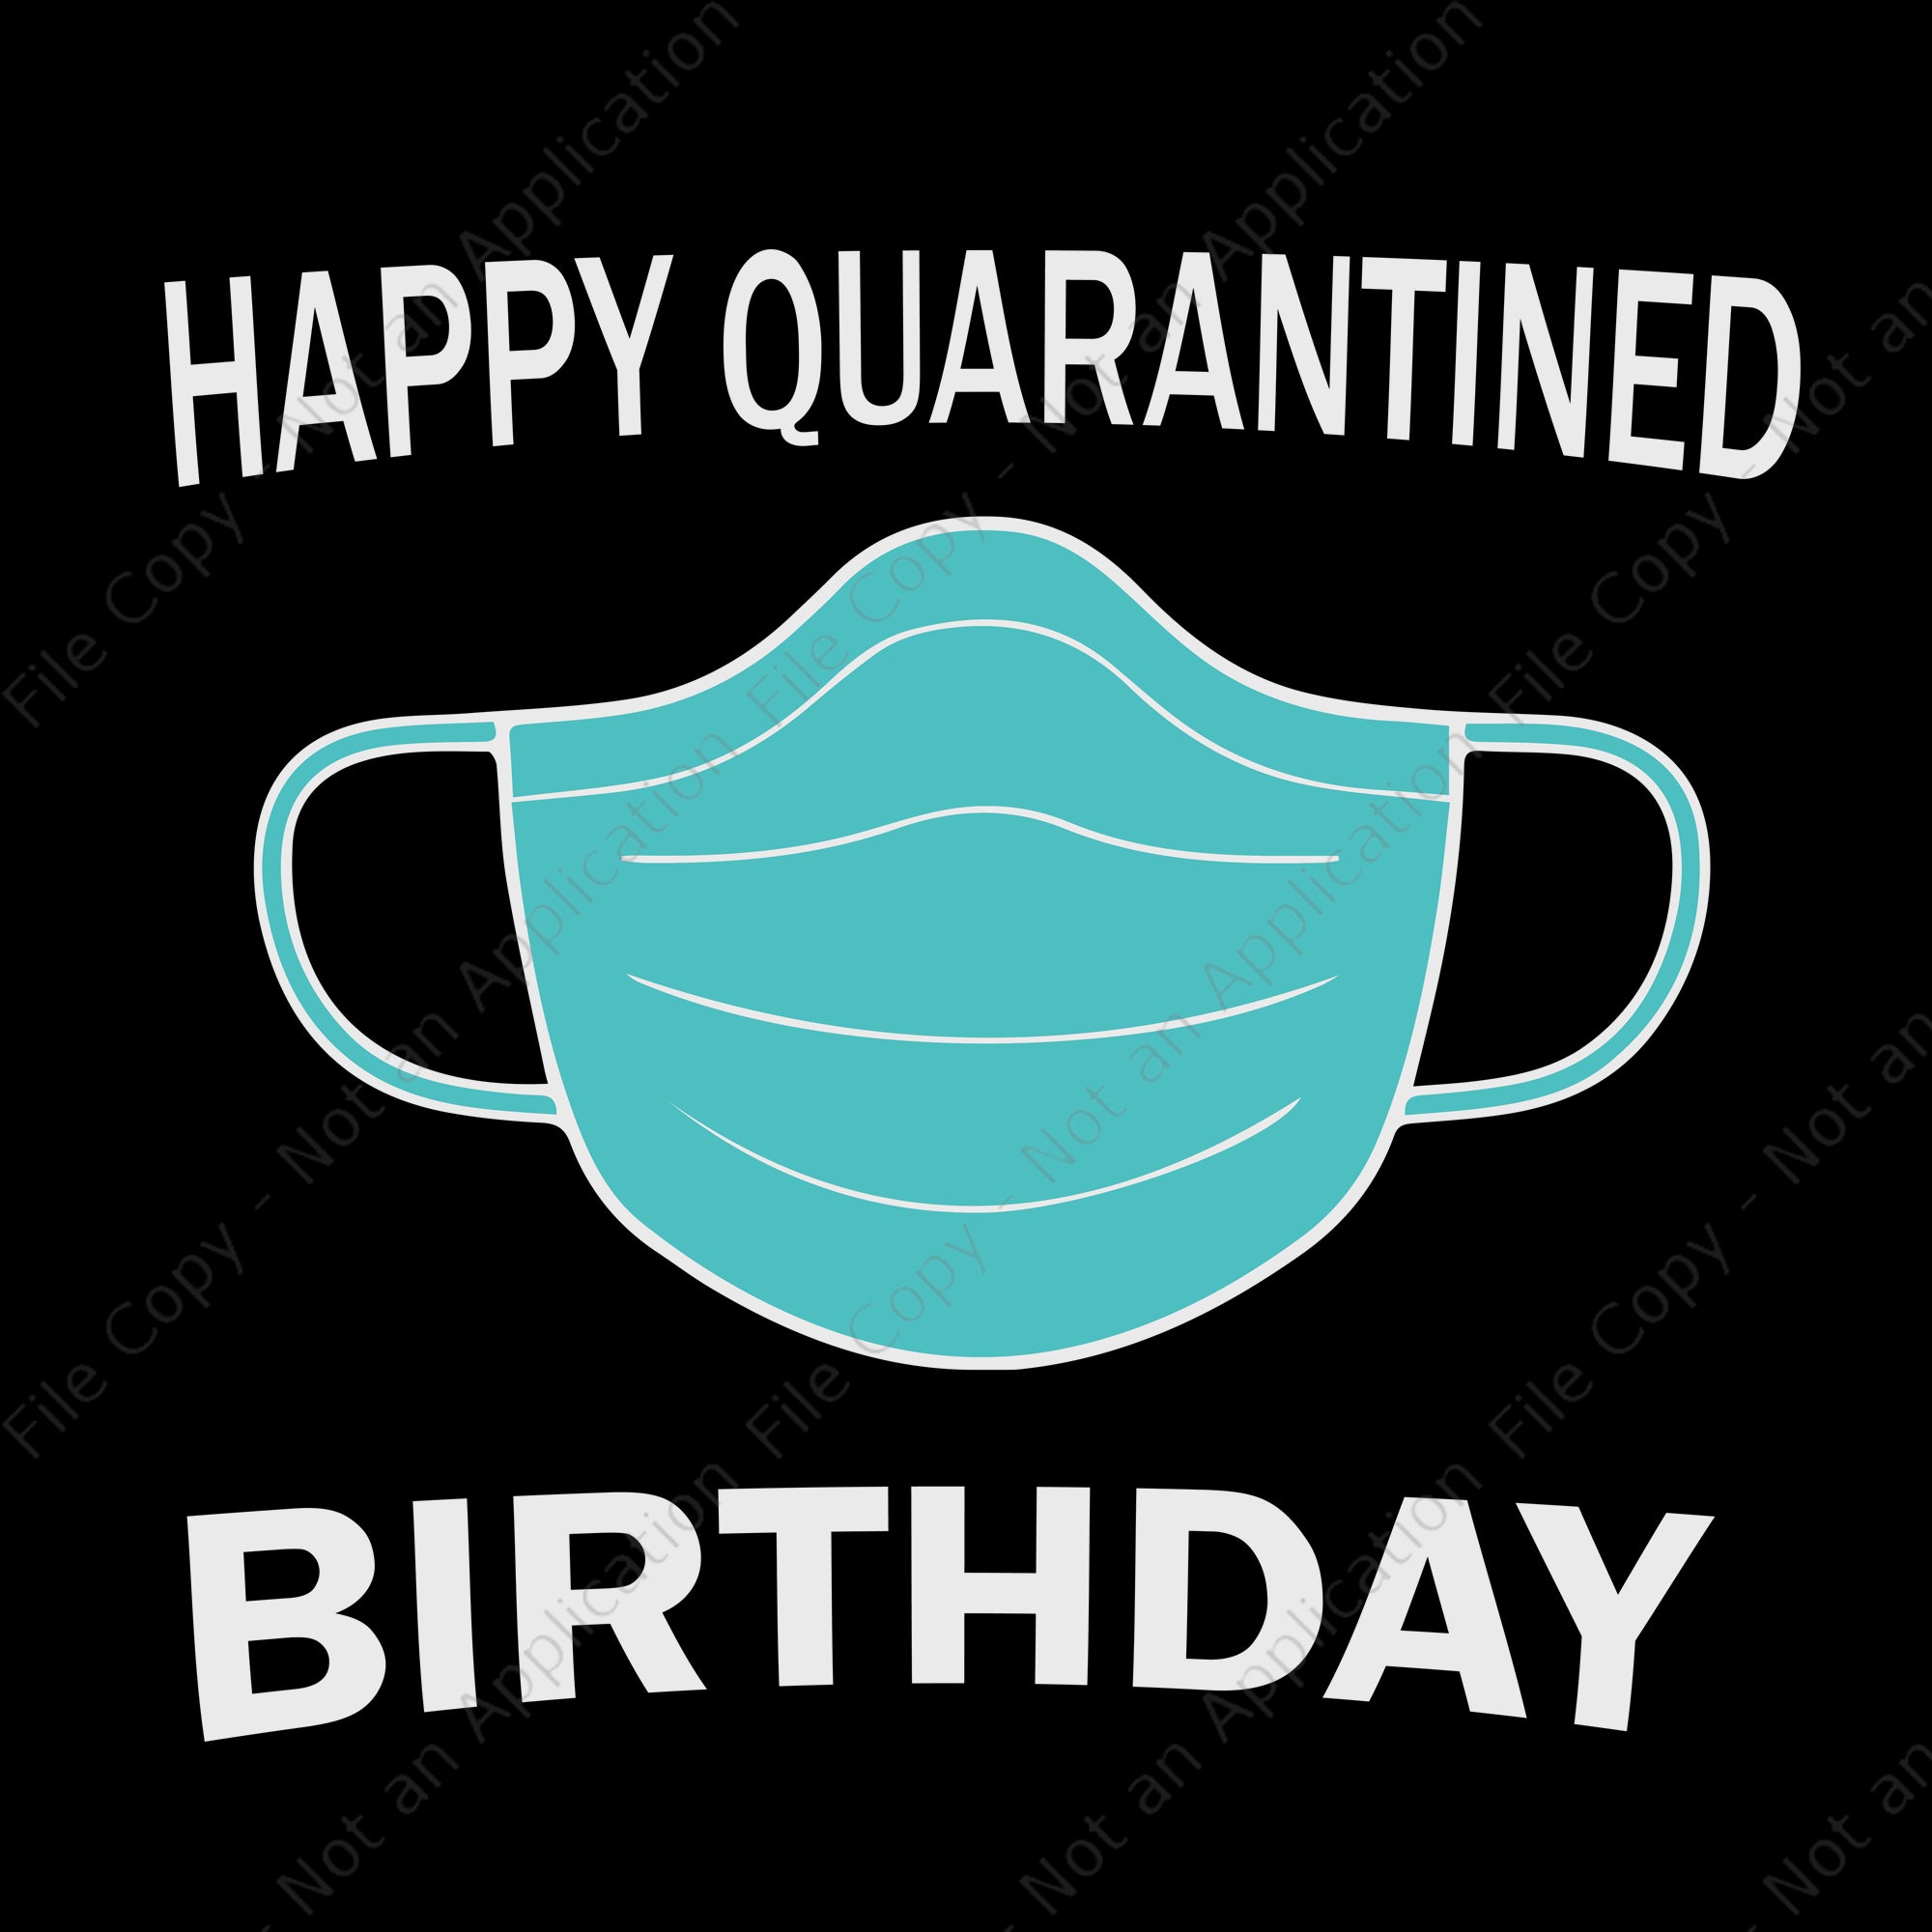 Happy quarantined birthday svg, happy quarantined birthday, happy quarantined birthday medical mask virus  png, eps, dxf, ai file